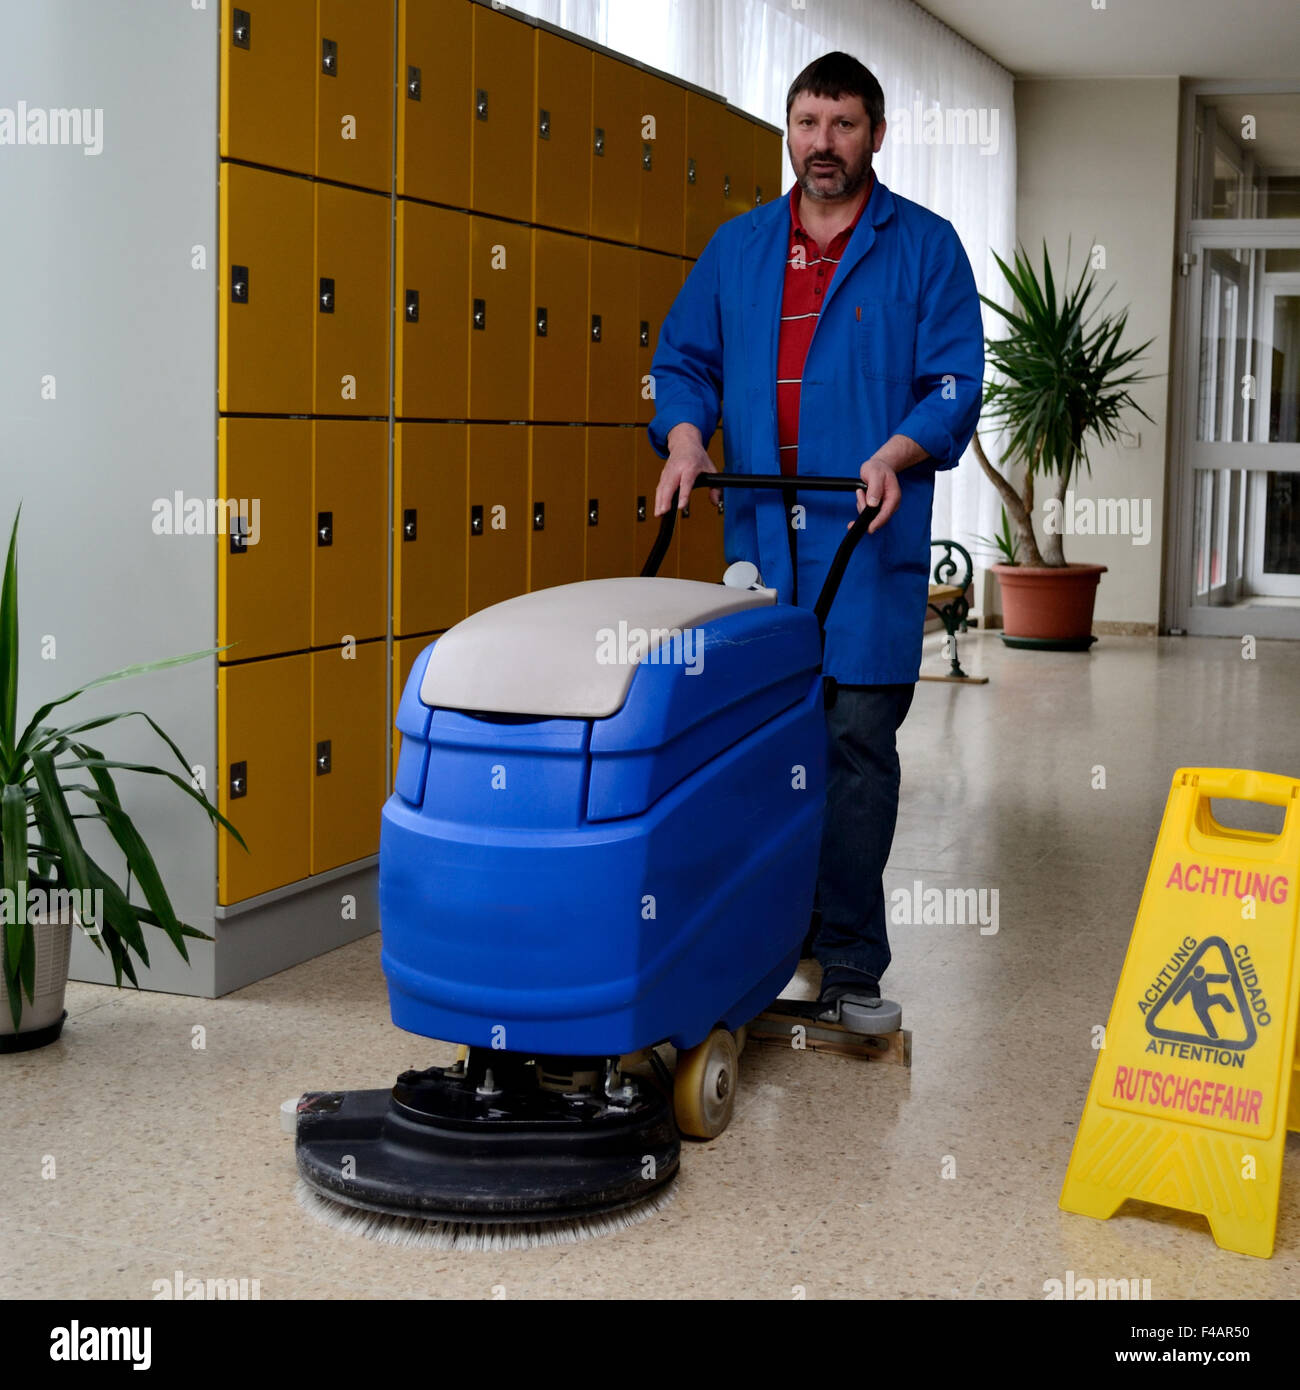 School caretaker with cleaning machine Stock Photo